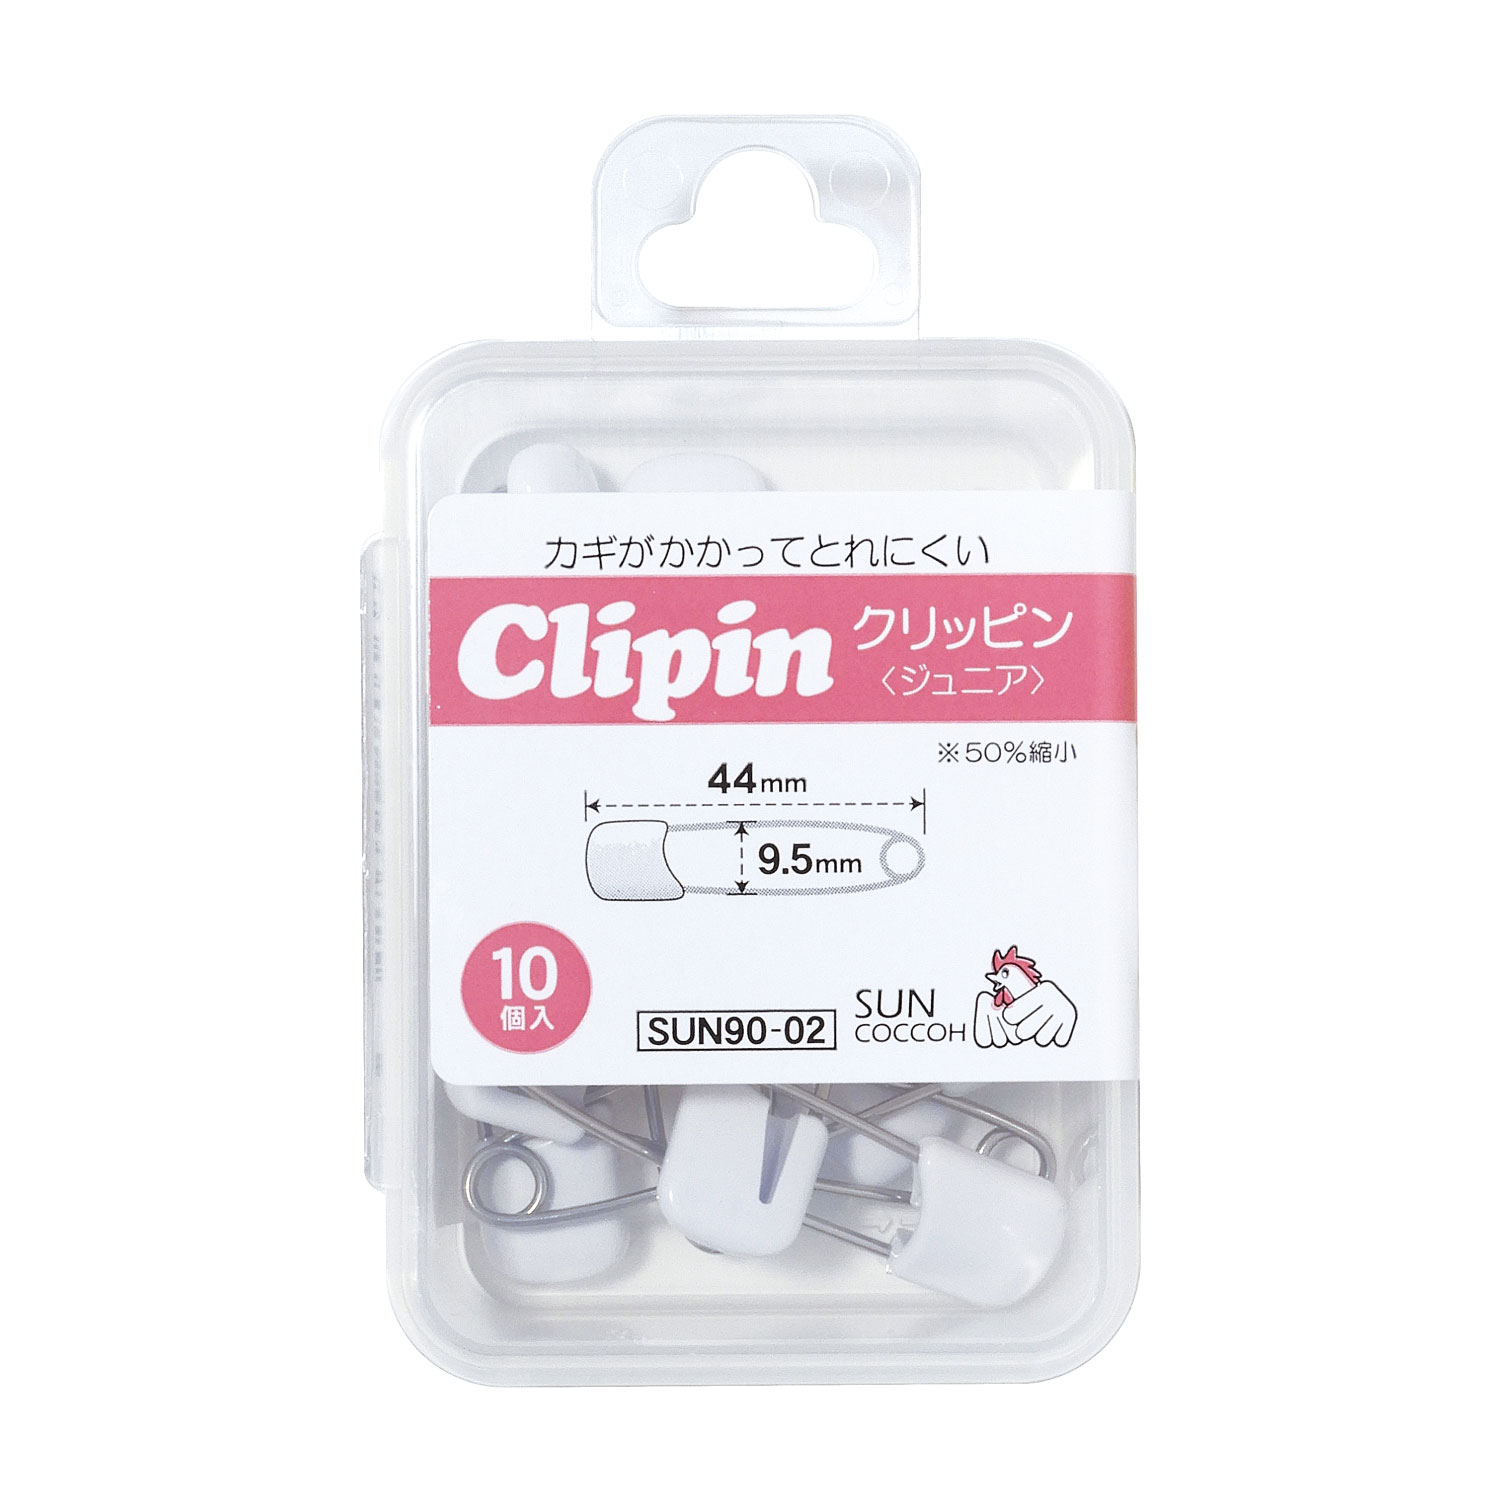 clipin-1.jpg